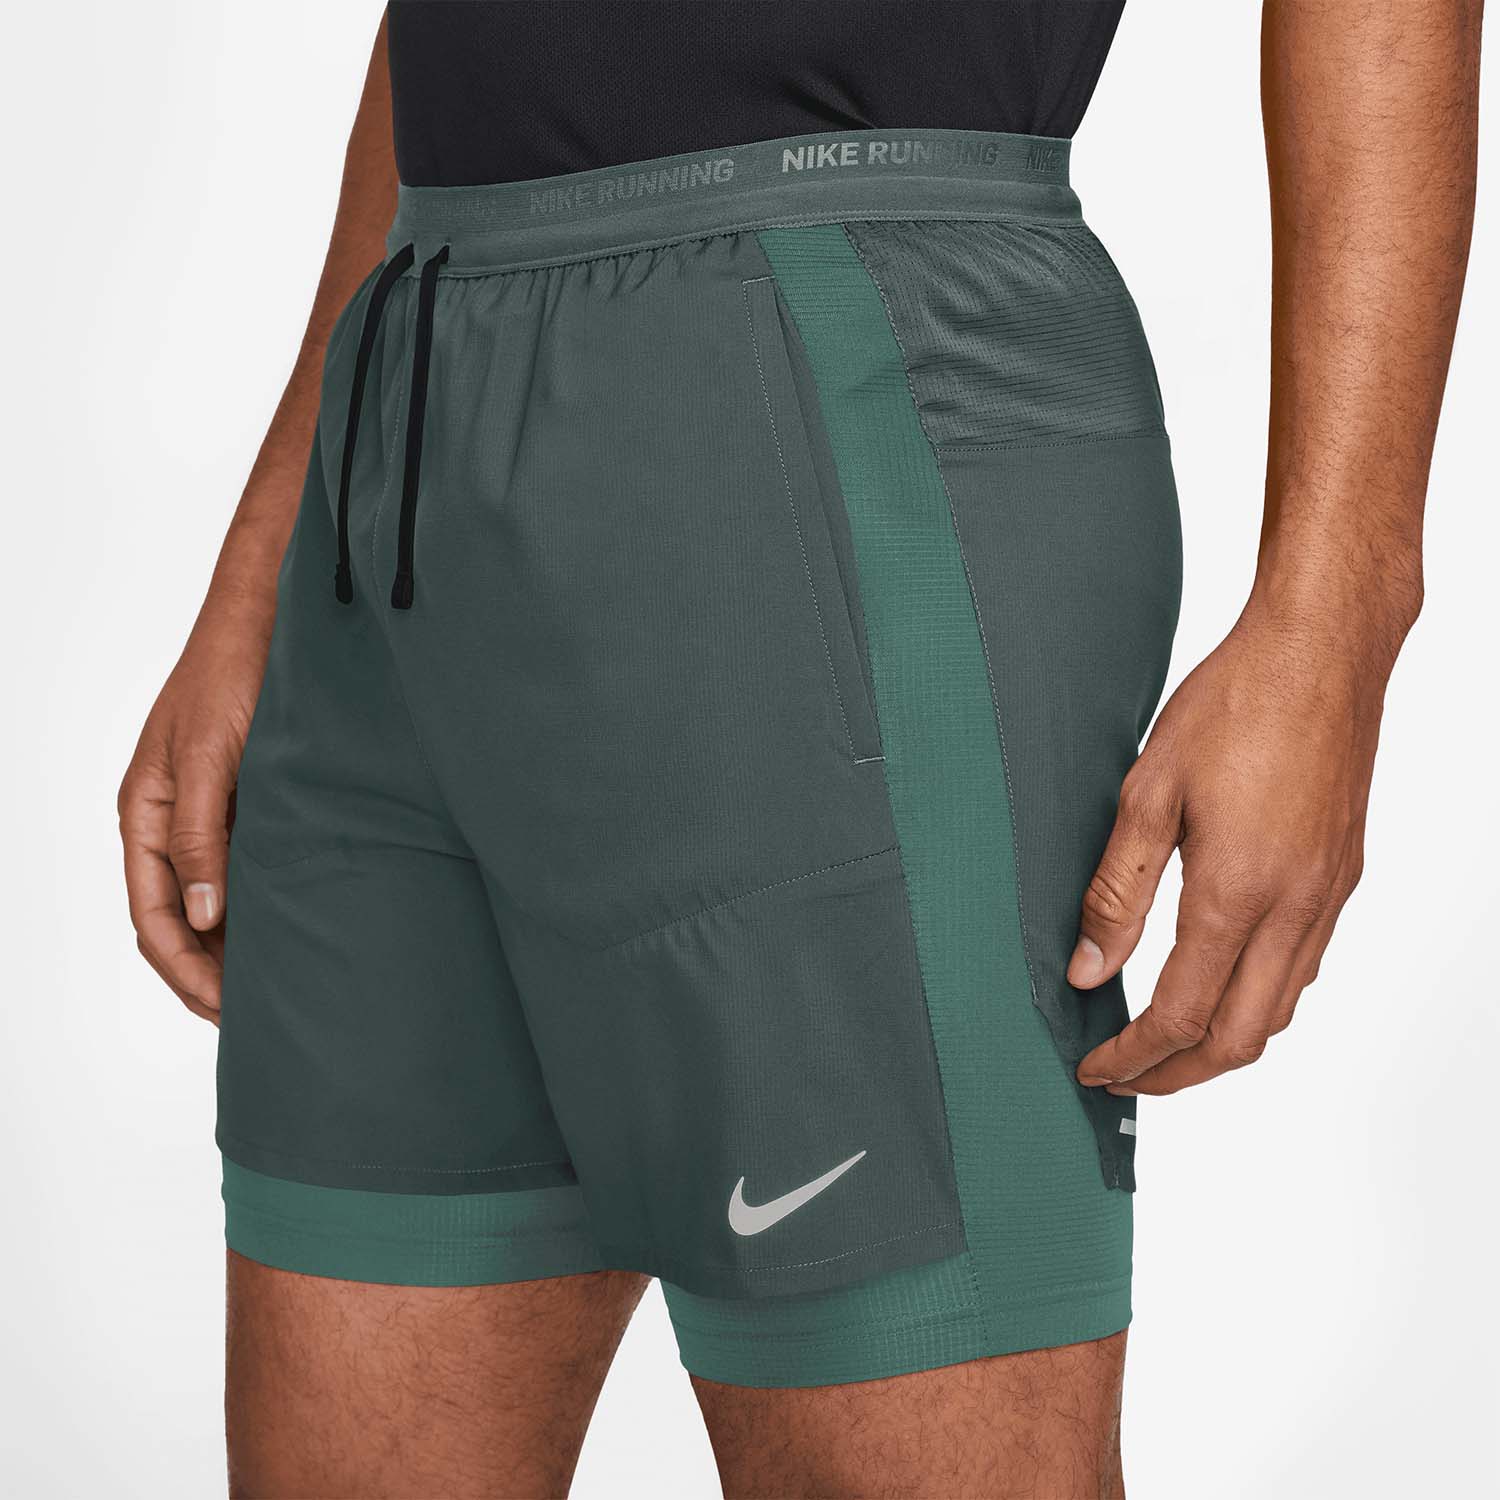 Nike Dri-FIT Stride Hybrid 2 in 1 5in Shorts - Vintage Green/Bicoastal/Reflective Silver